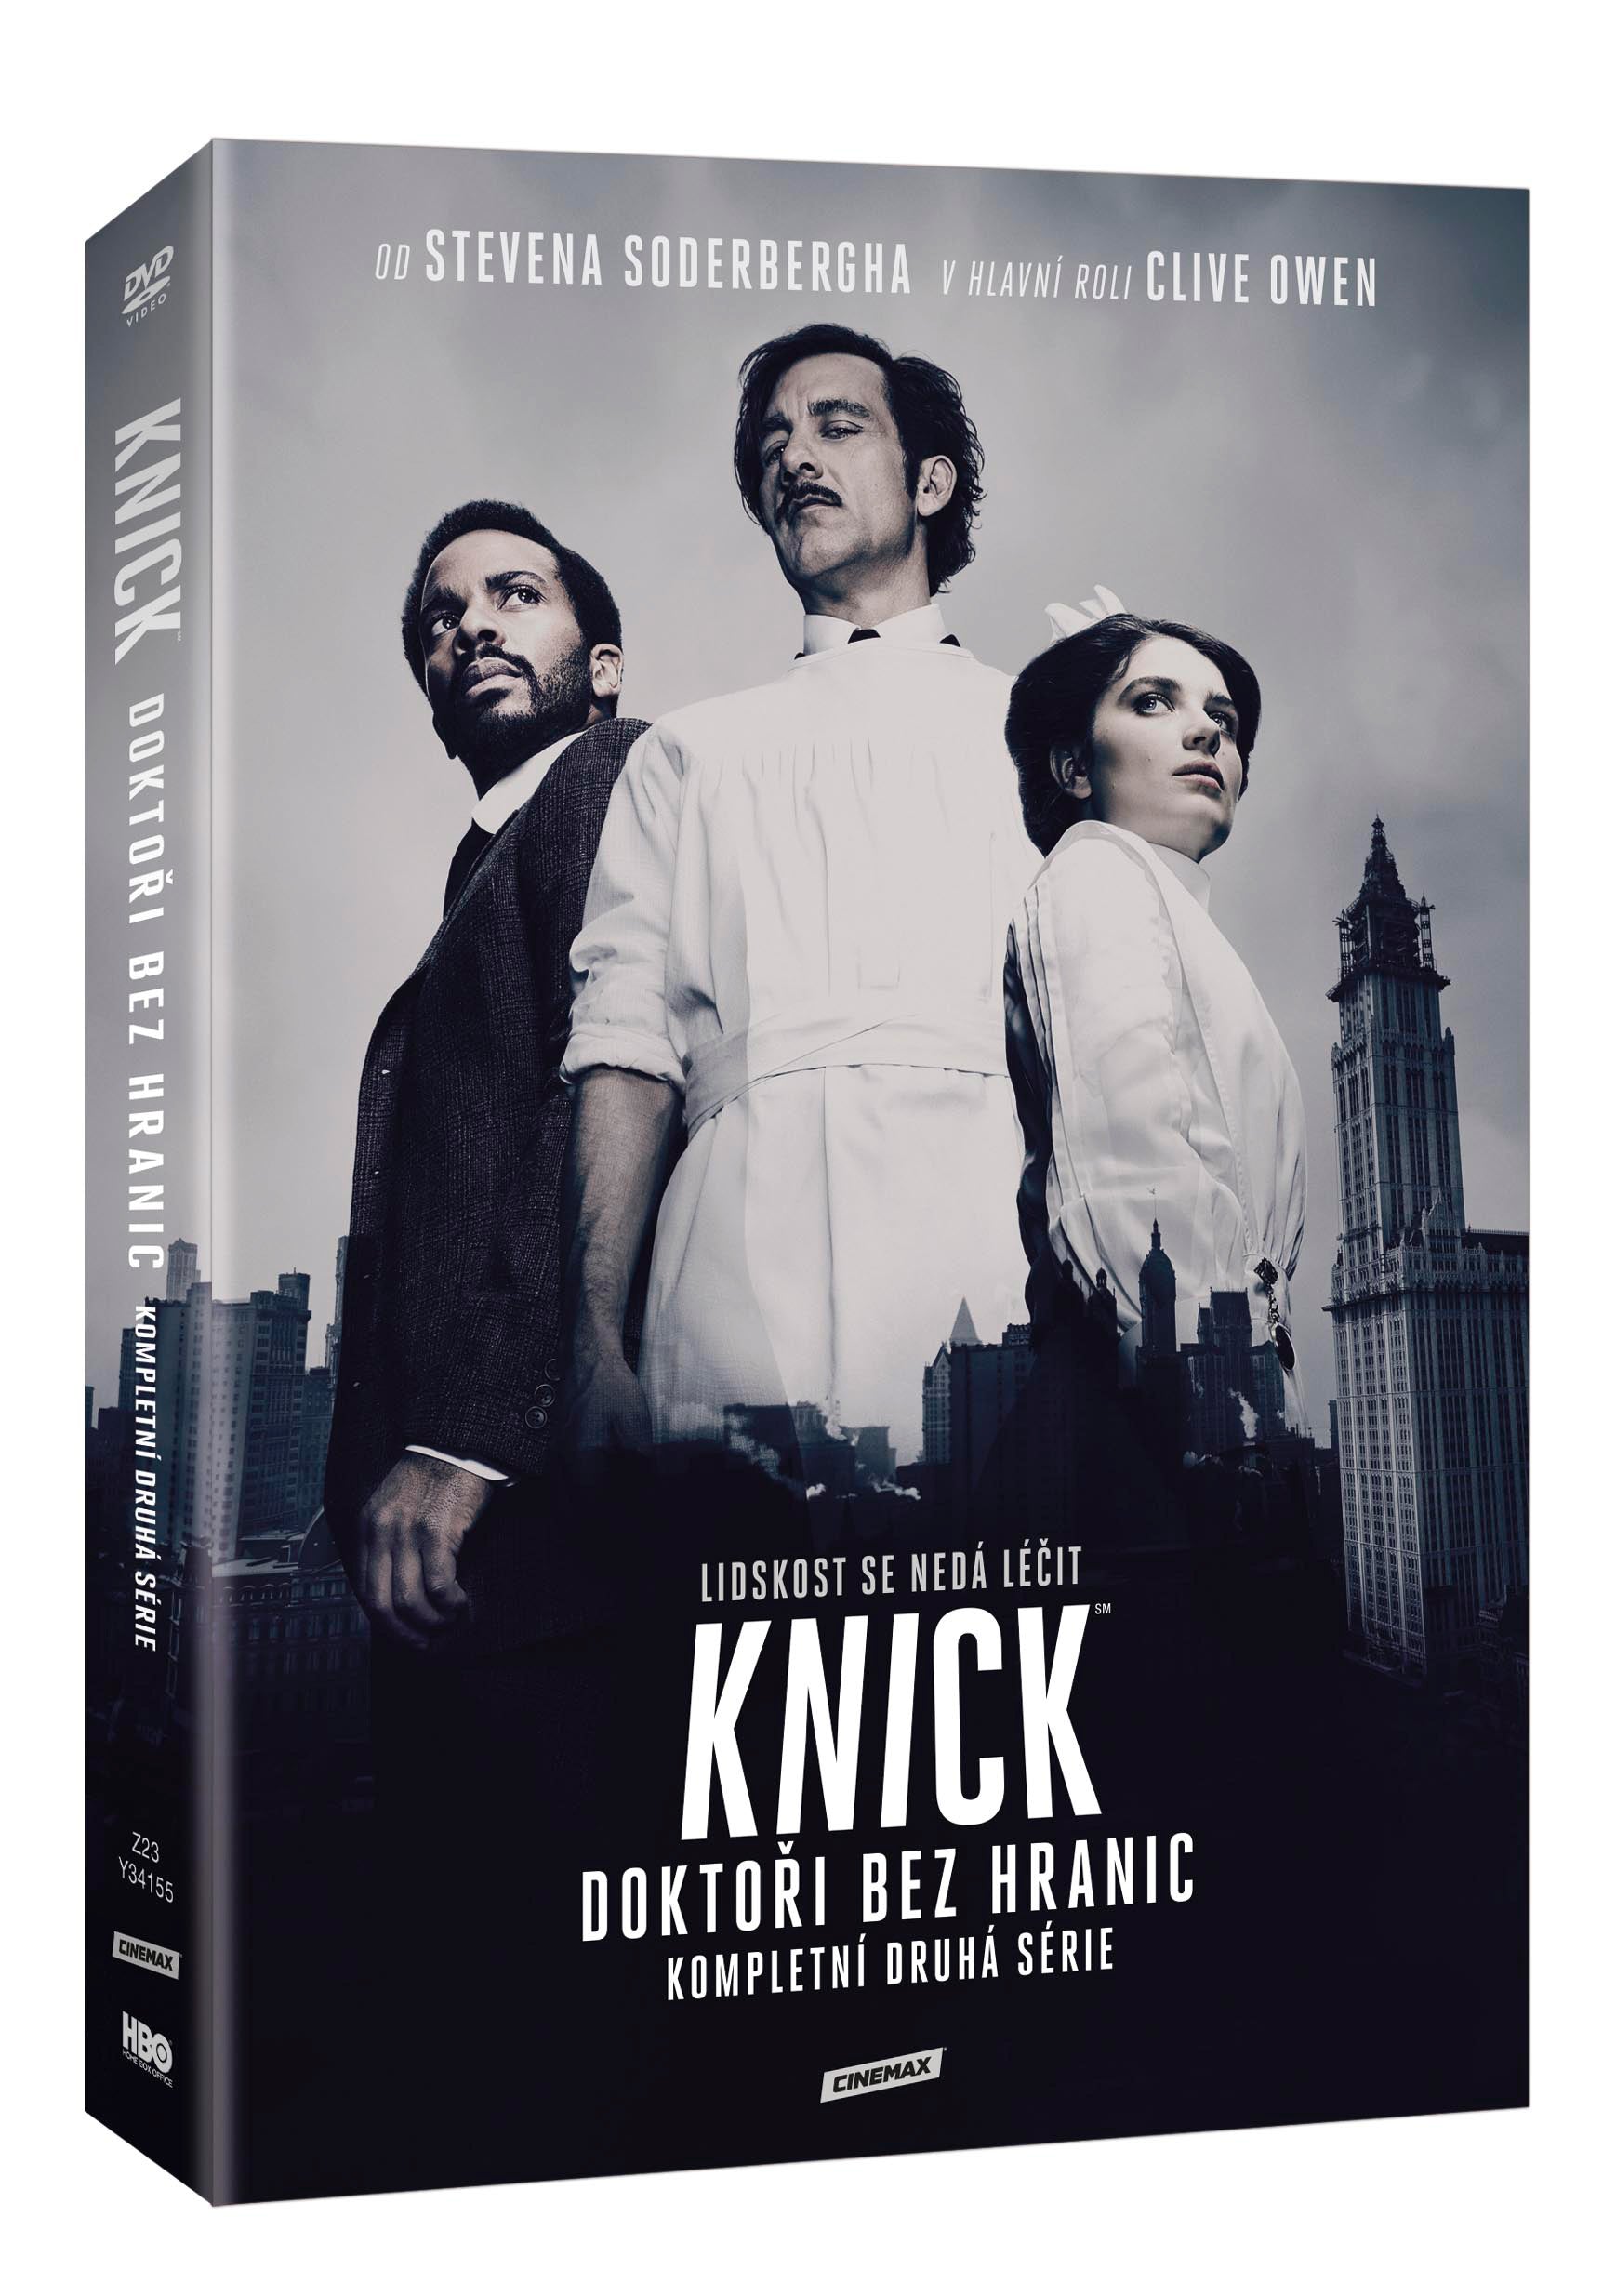 Knick: Doktori bez hranic 2. serie 4DVD (VIVA baleni) / The Knick Season 2